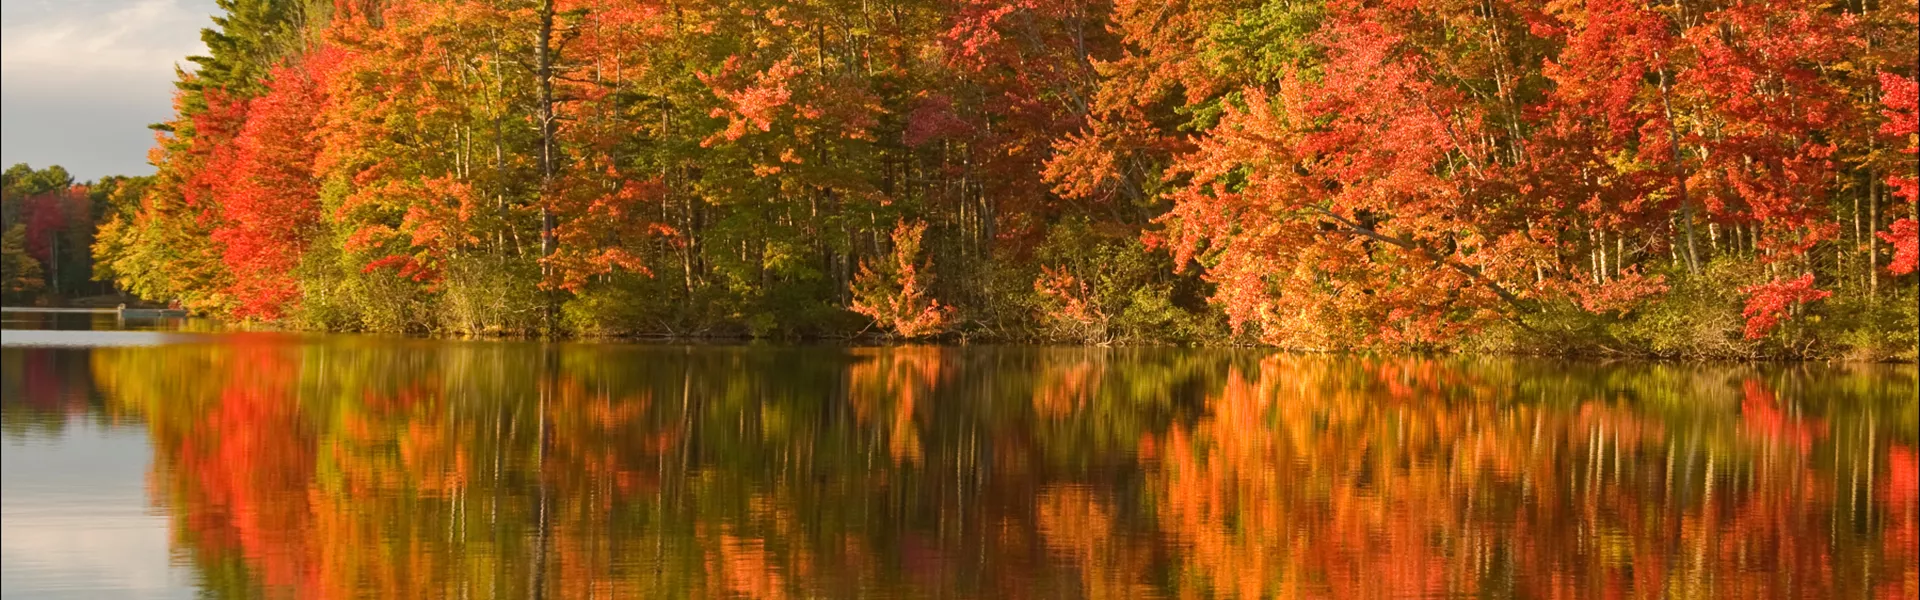 Fall foliage in New England